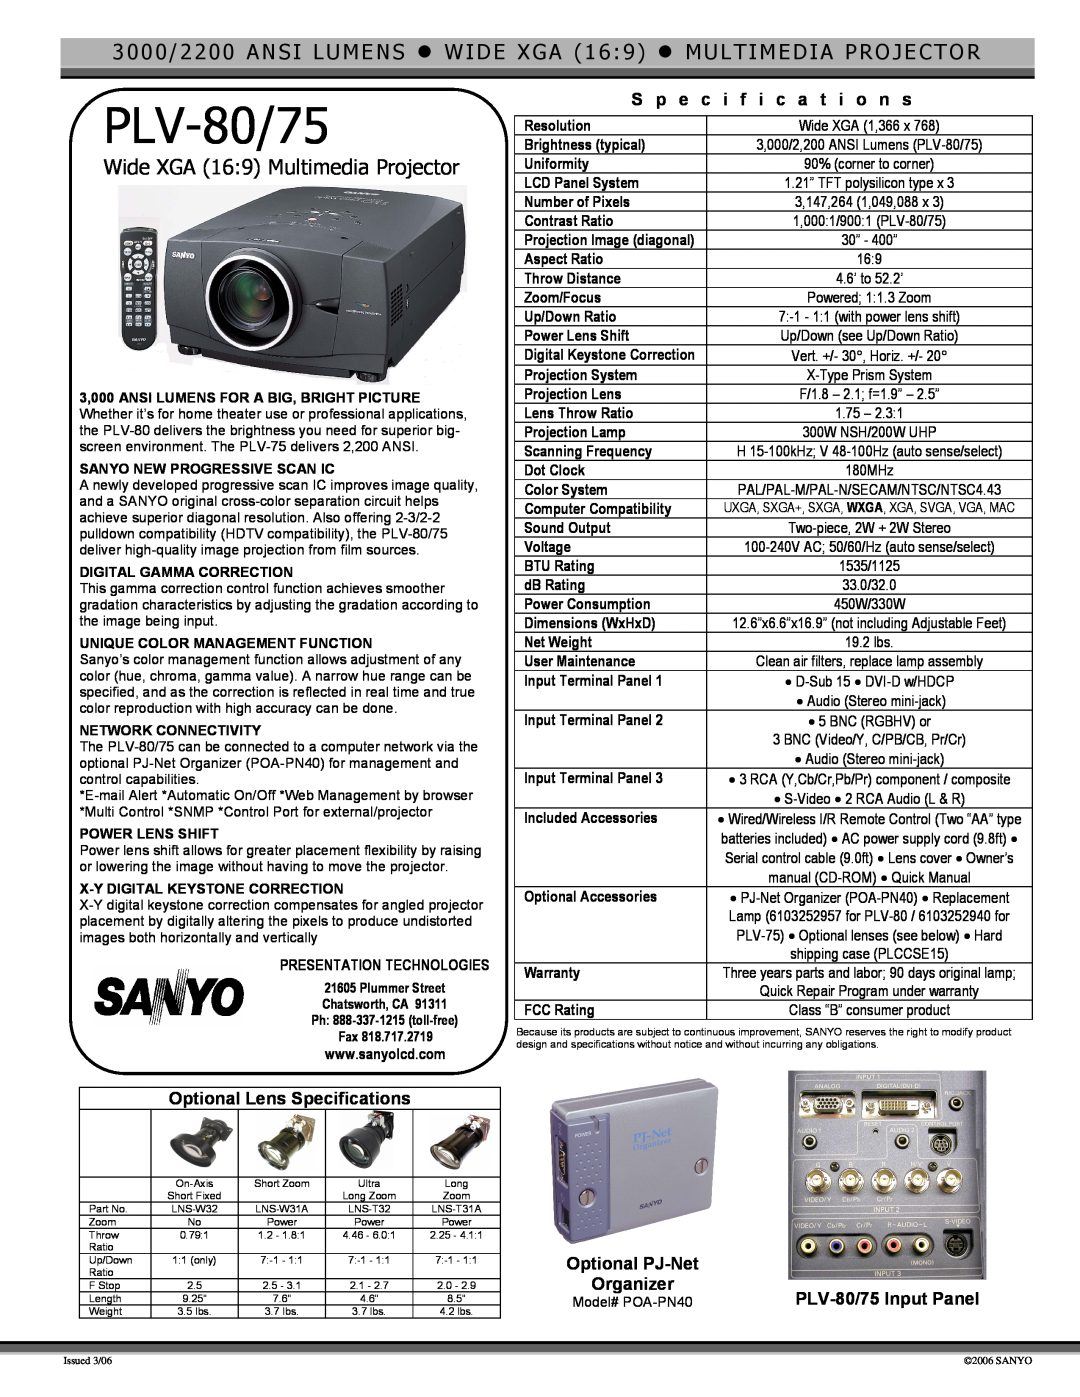 Sanyo PLV-80/75 specifications Wide XGA 16 9 Multimedia Projector, S p e c i f i c a t i o n s, Optional PJ-Net 